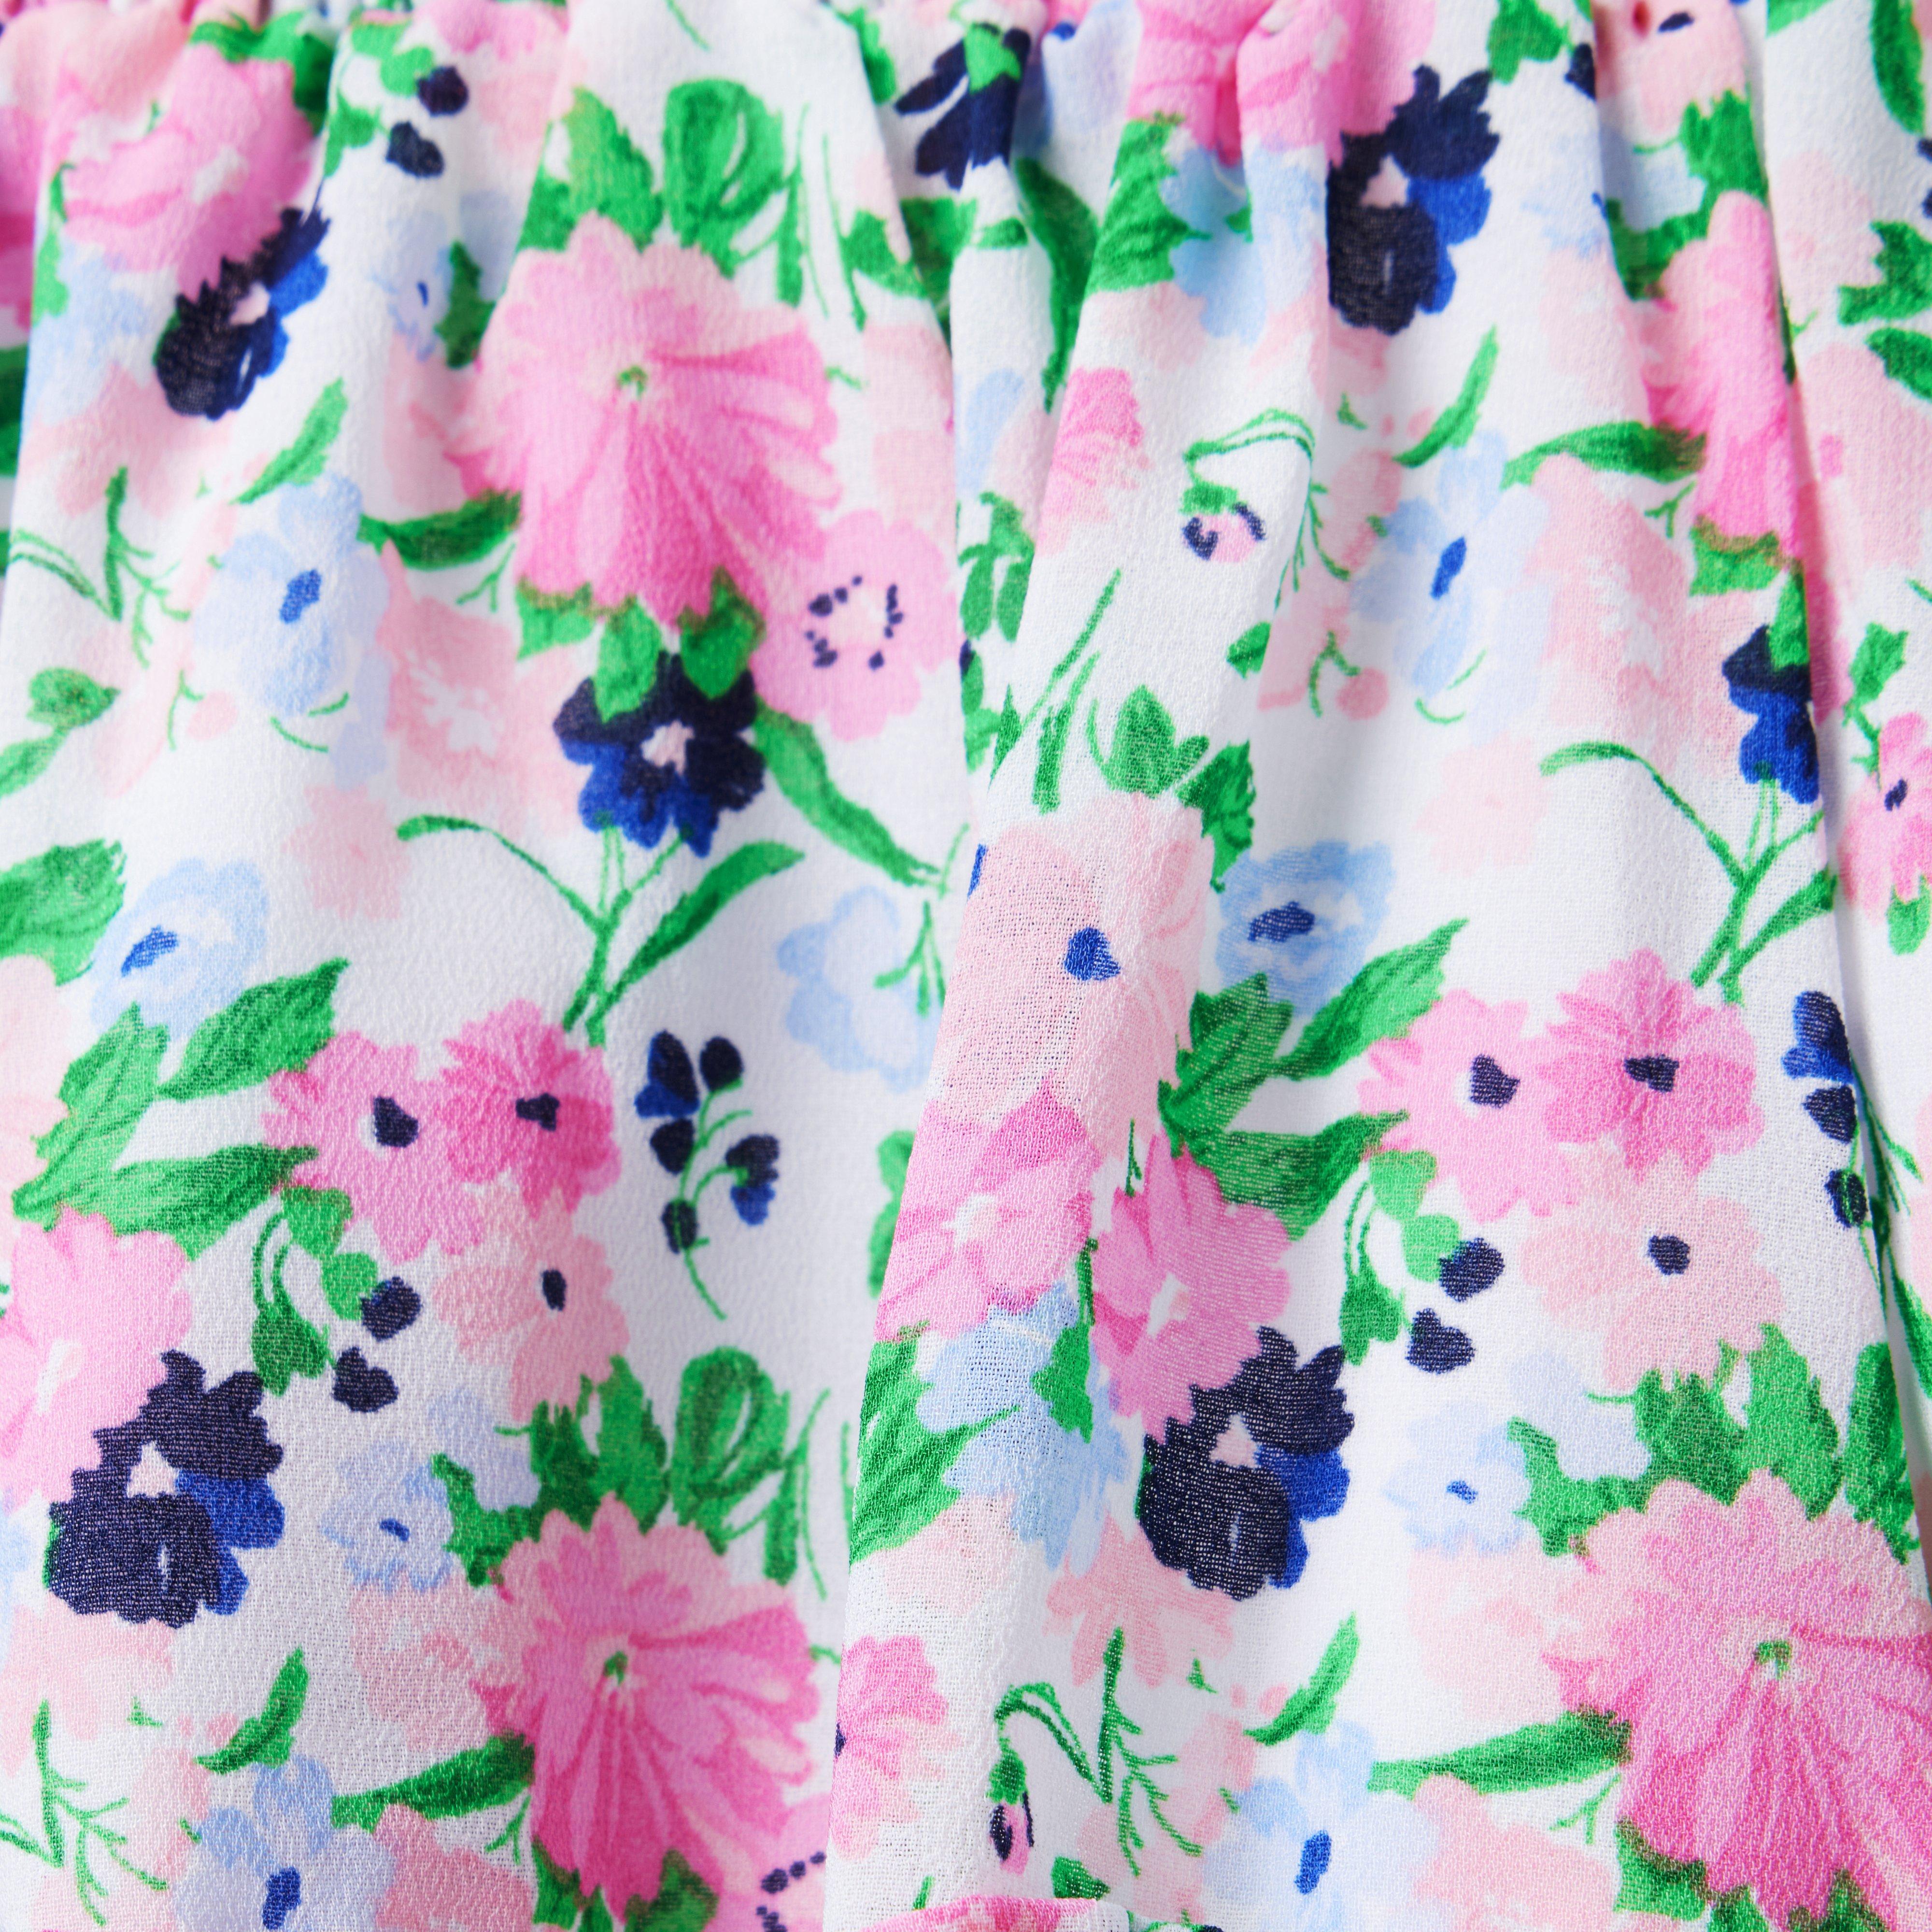 Floral Smocked Chiffon Skirt